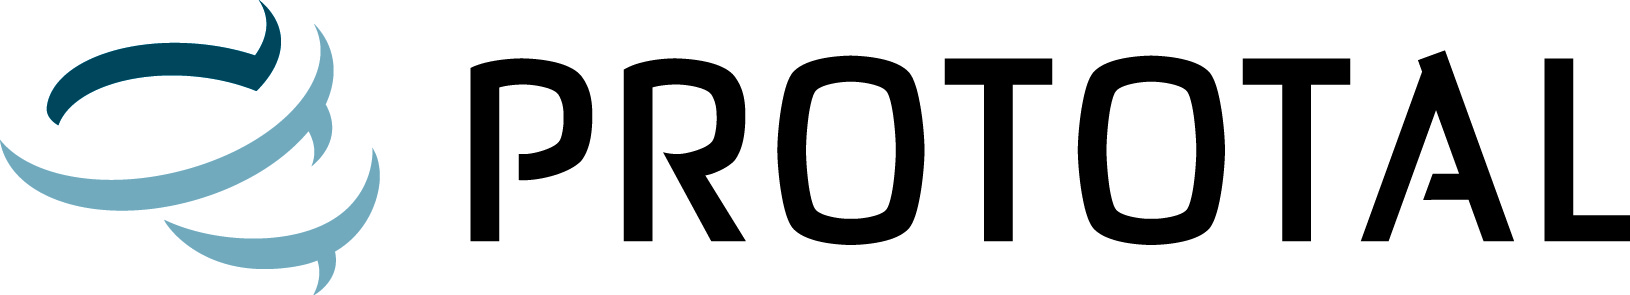 Prototal logo